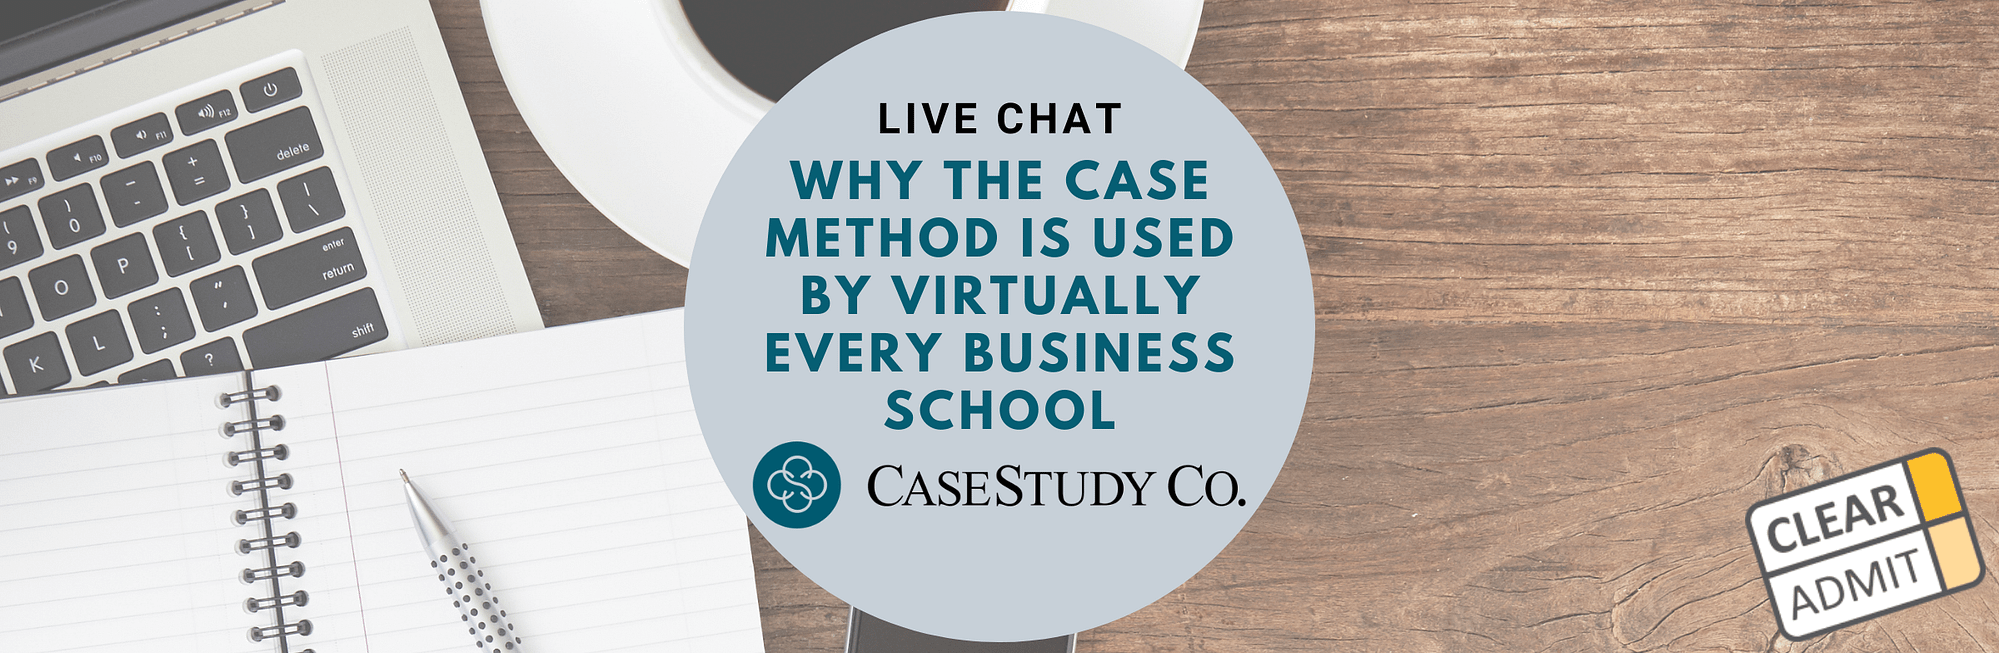 Case Method Live Chat